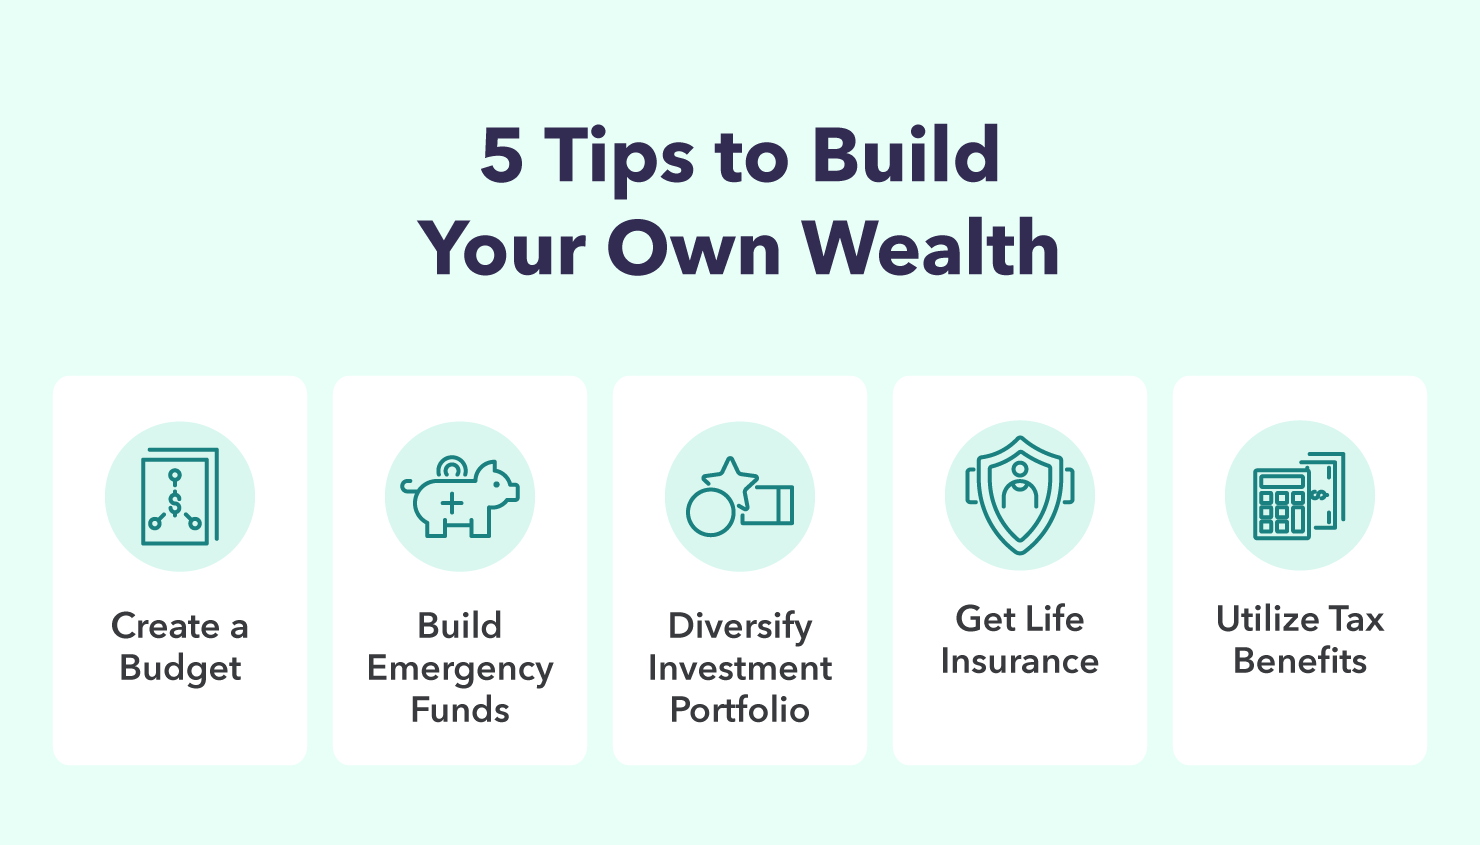 5 Wealth-Building Tips: Budget, Build Emergency Fund, Diversify Investment Portfolio, Get Life Insurance, Utilize Tax Benefits. 